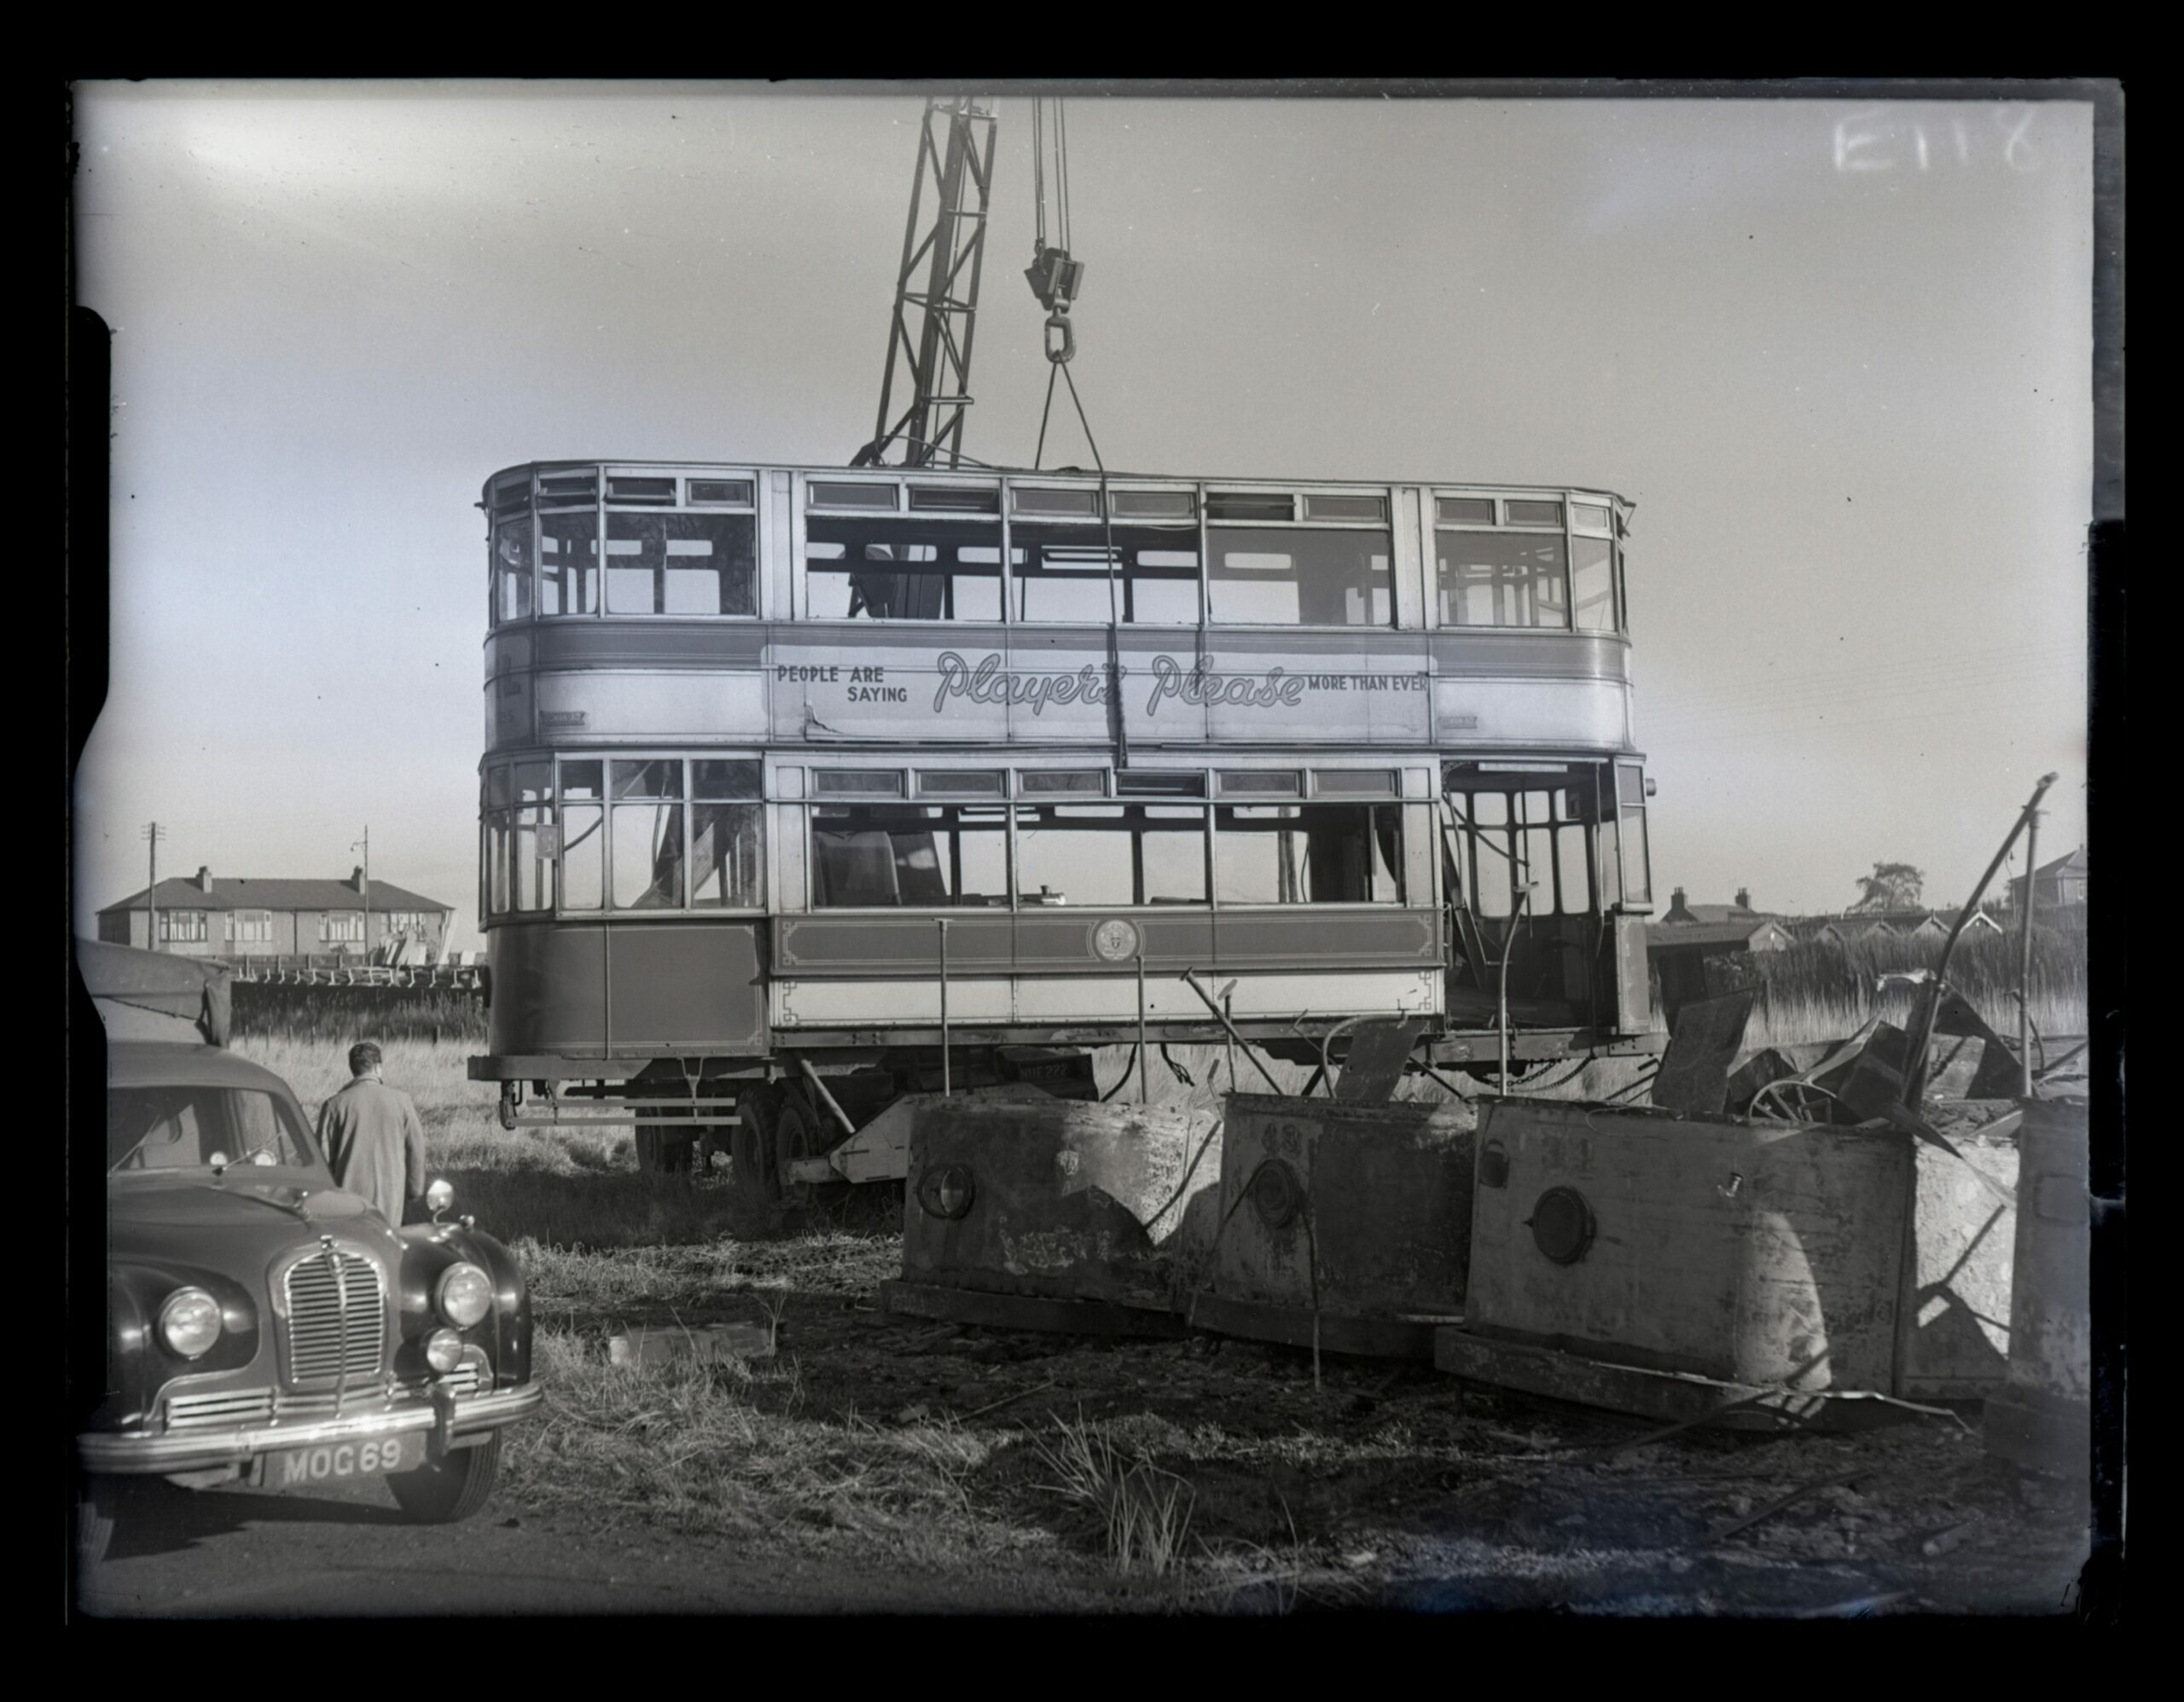 Dundee demolishing the last trams of the fleet in 1956.